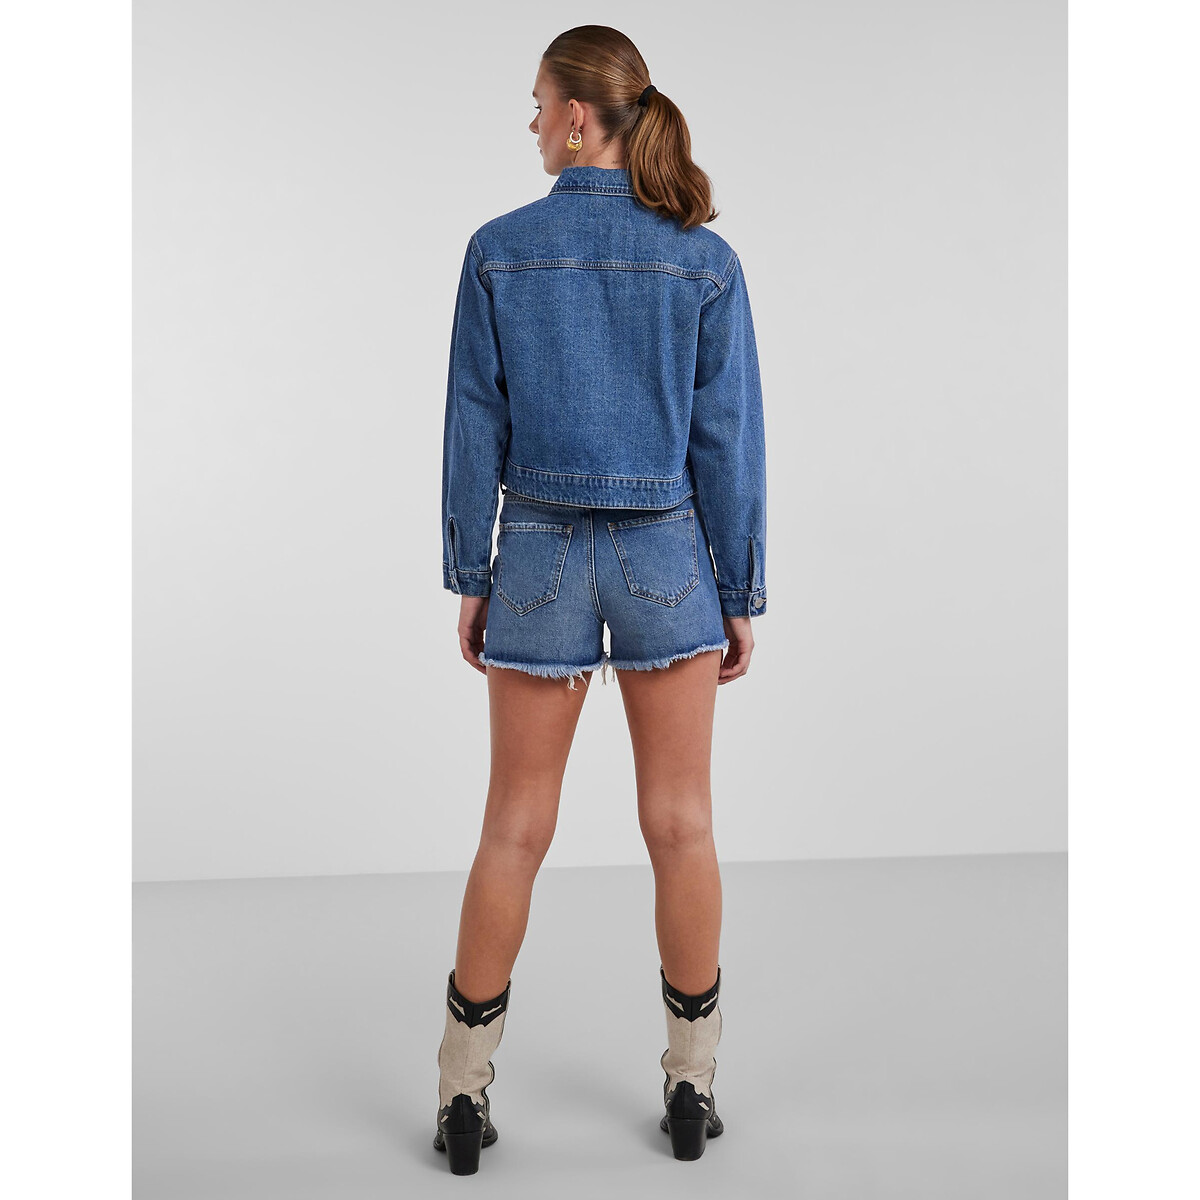 Жакет Короткий из джинсовой ткани L синий LaRedoute, размер L - фото 3